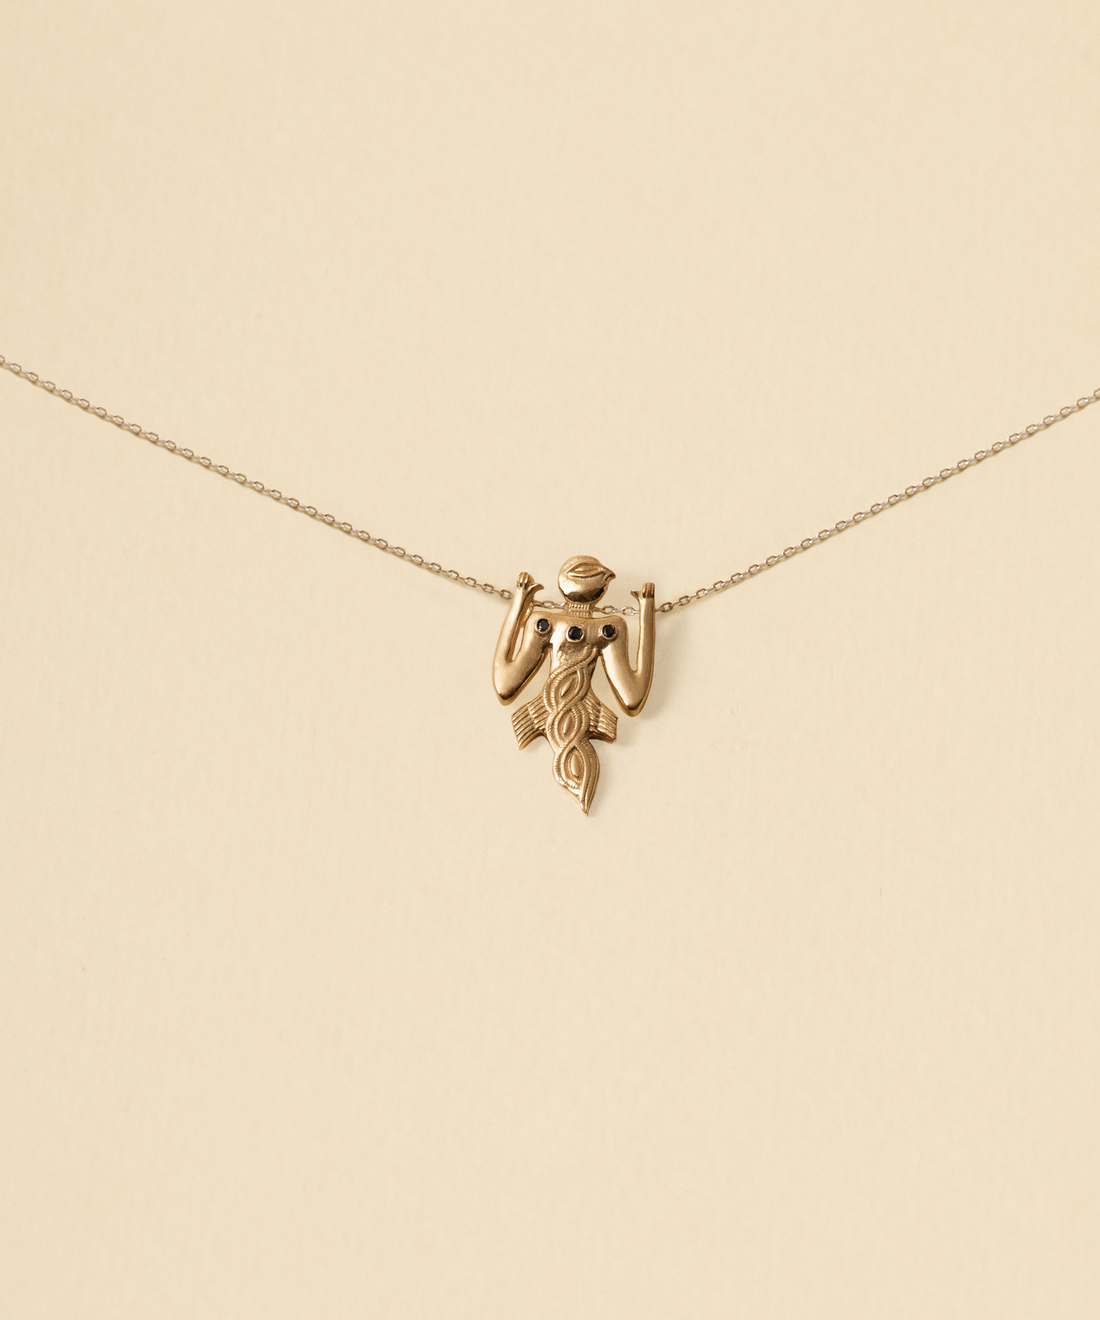 Birdman Gold Necklace Small